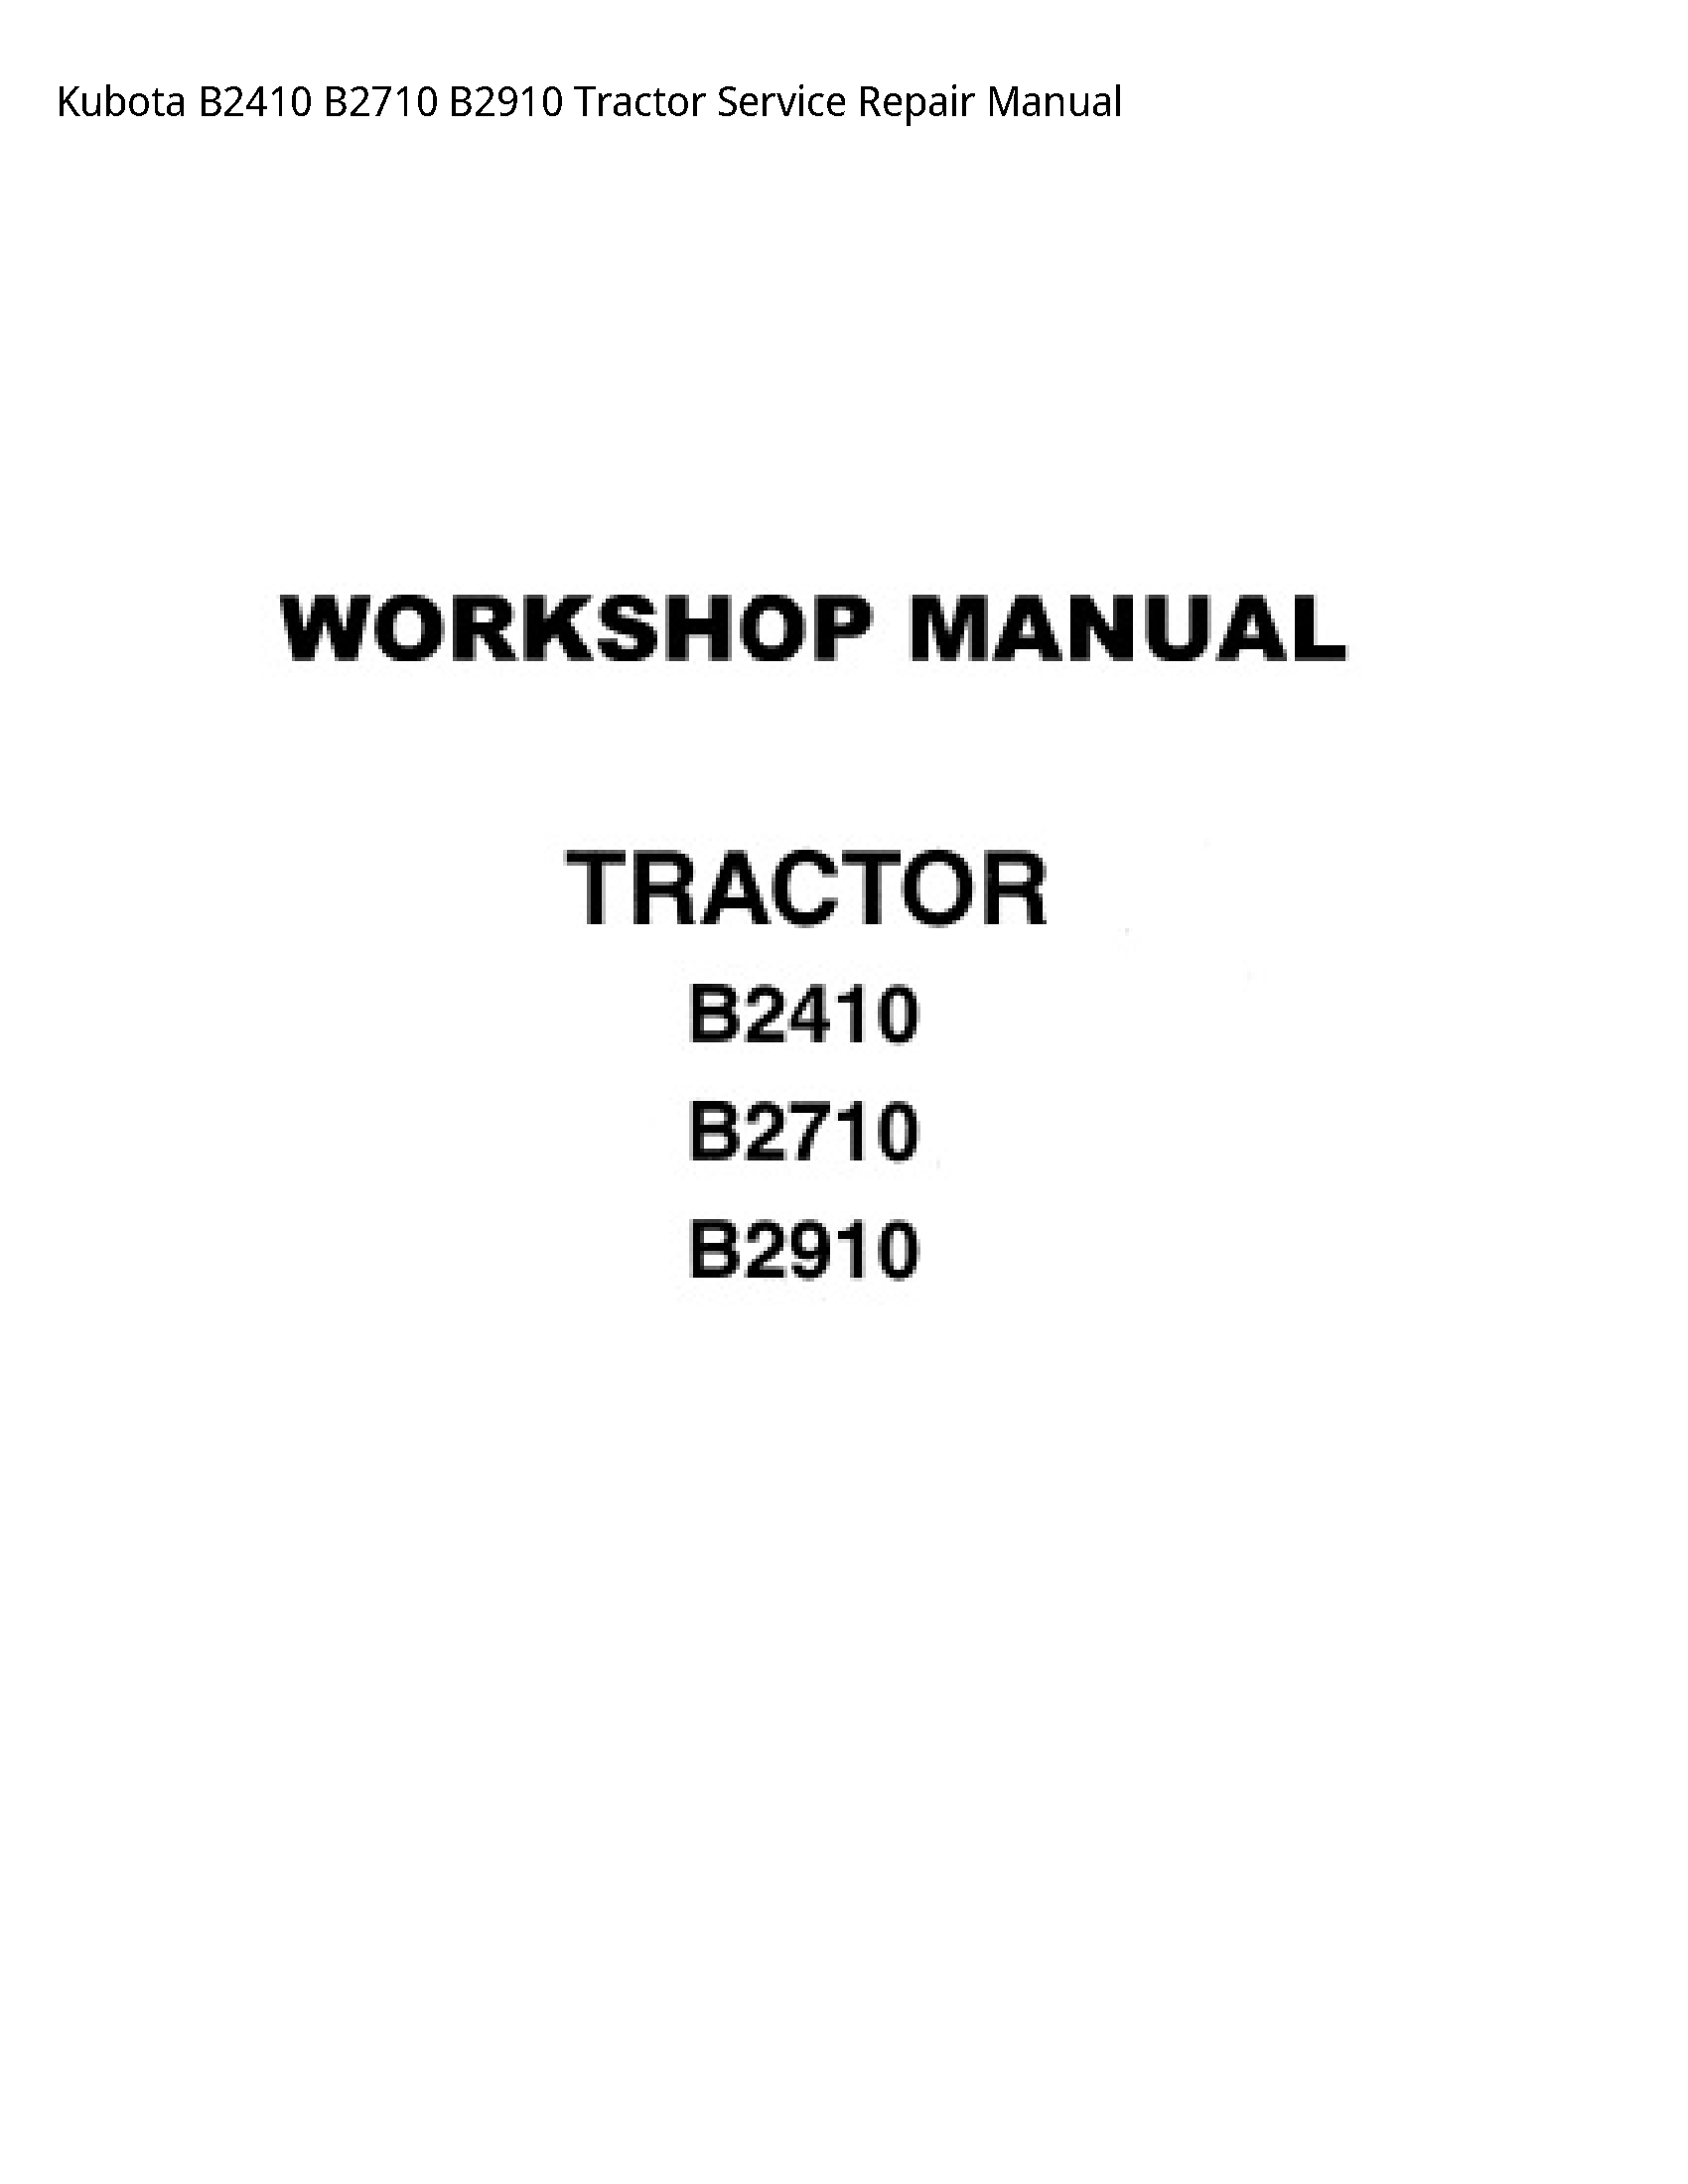 Kubota B2410 Tractor manual